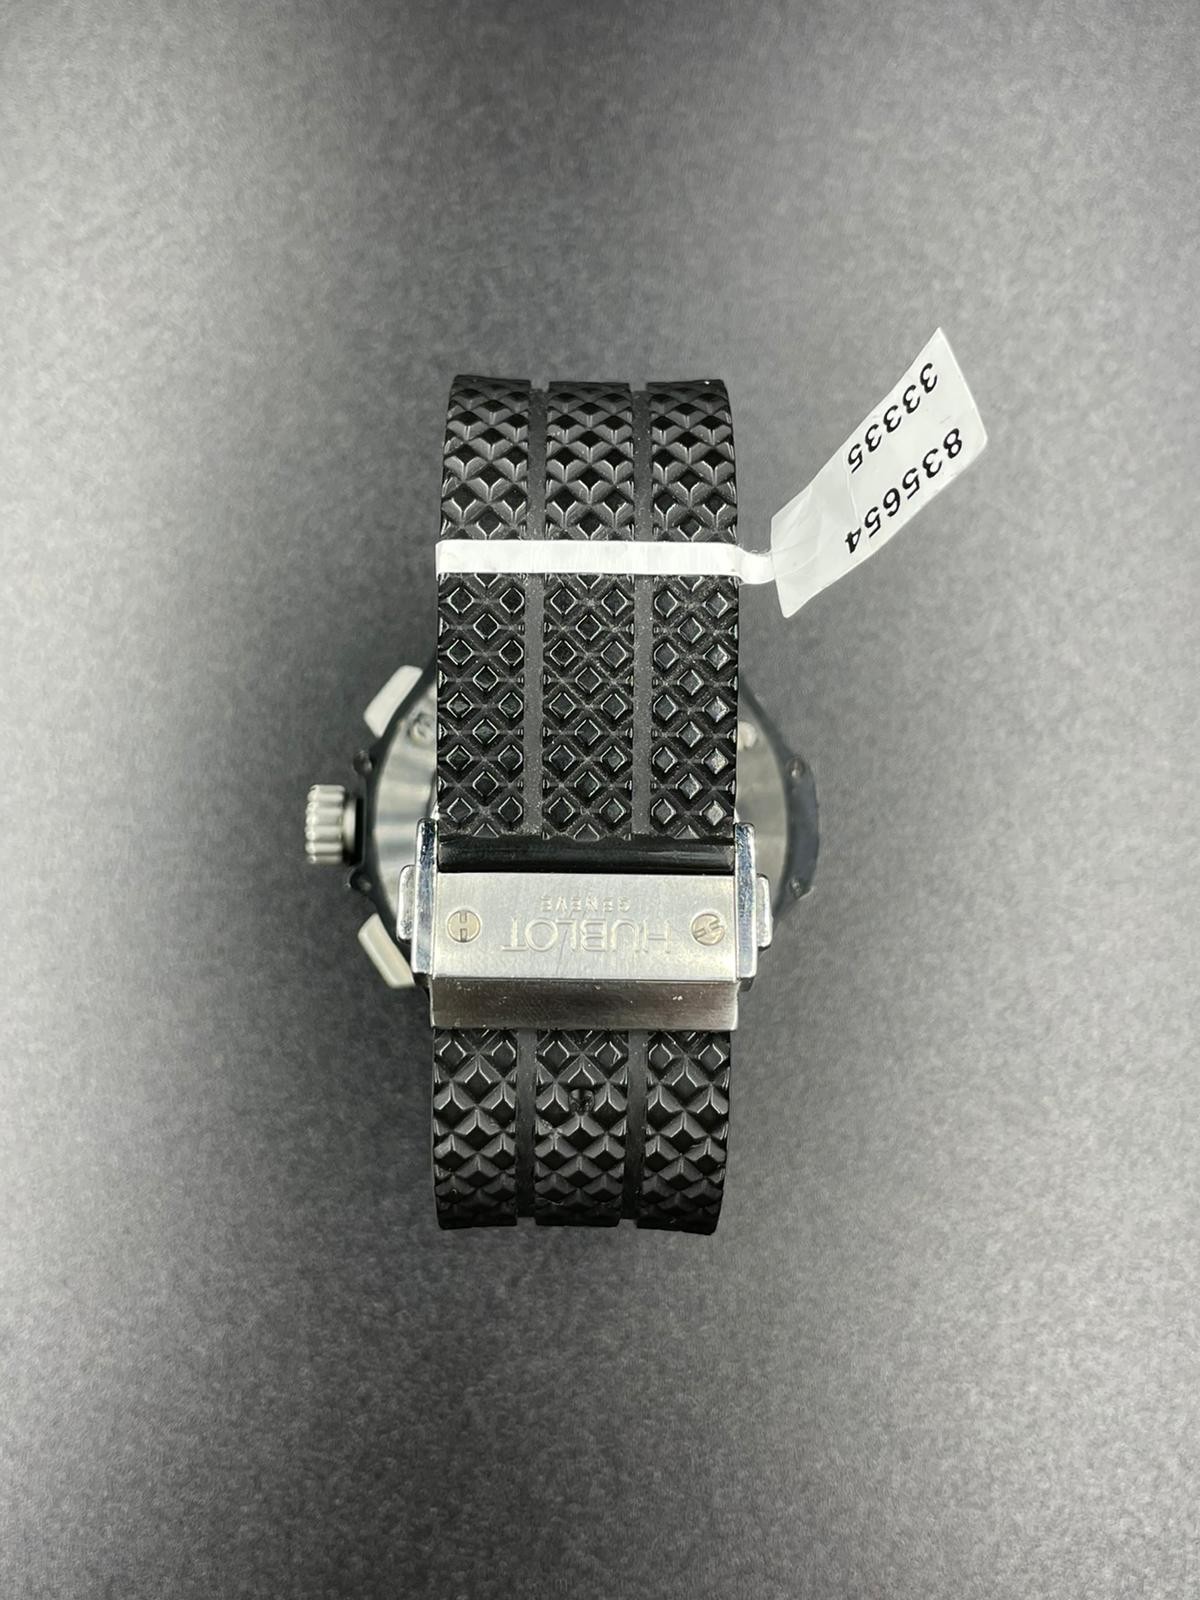 Hublot Big Bang chronometer watch black face and skeleton back - Image 2 of 4